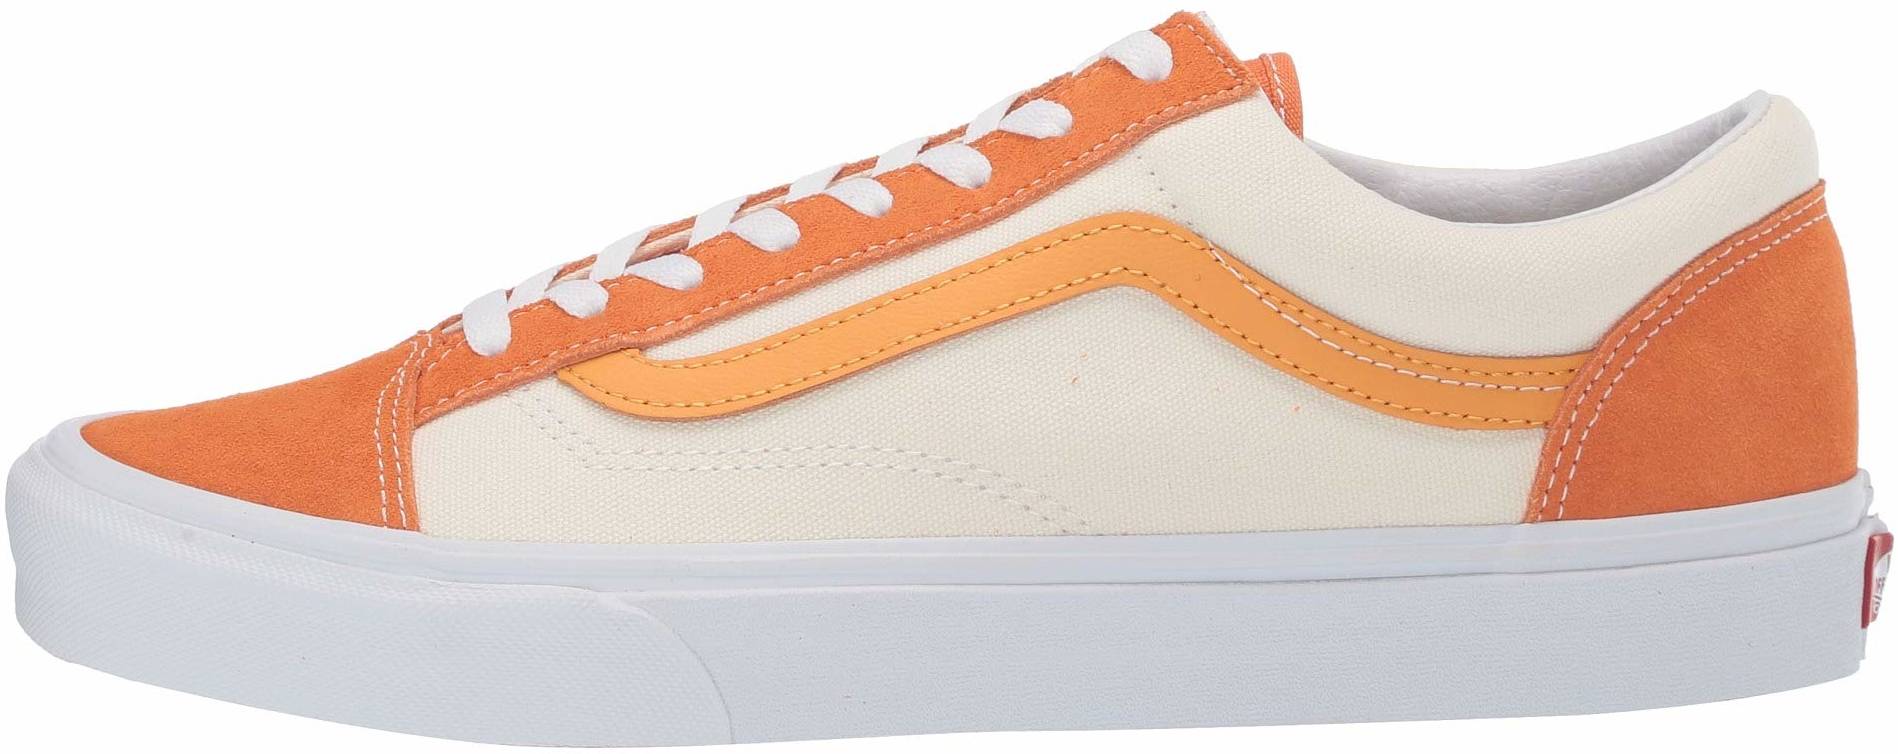 vans style 36 orange